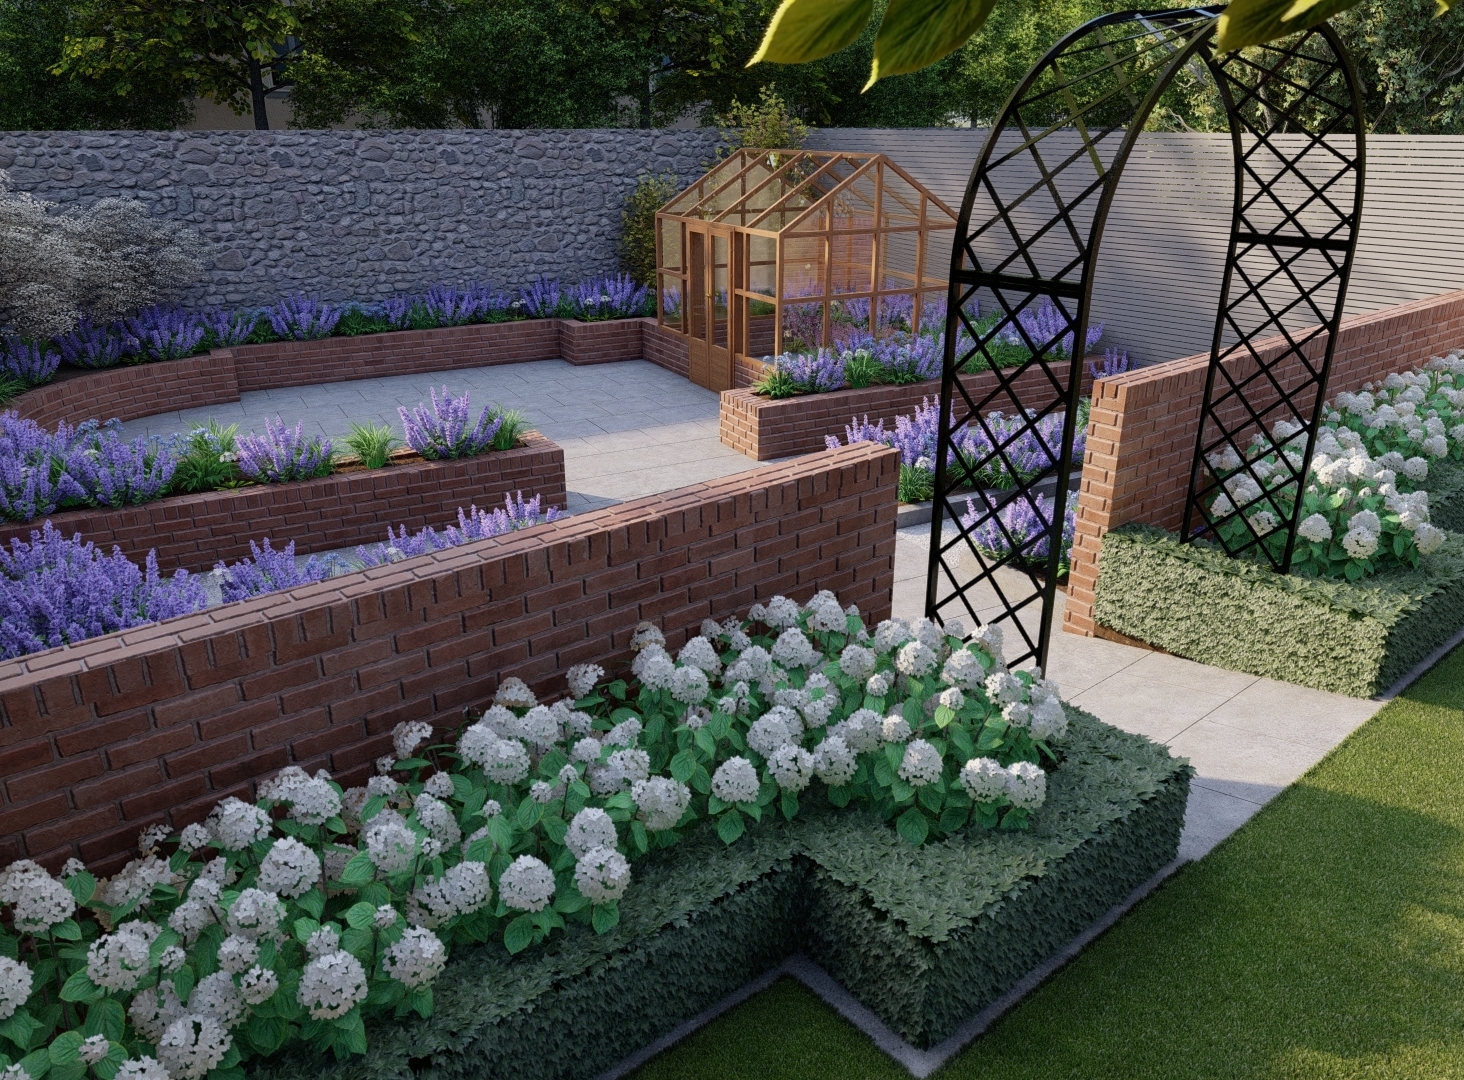 Garden Design Churchtown, Dublin 14 featuring patio areas, raised beds, custom garden fencing & greenhouse